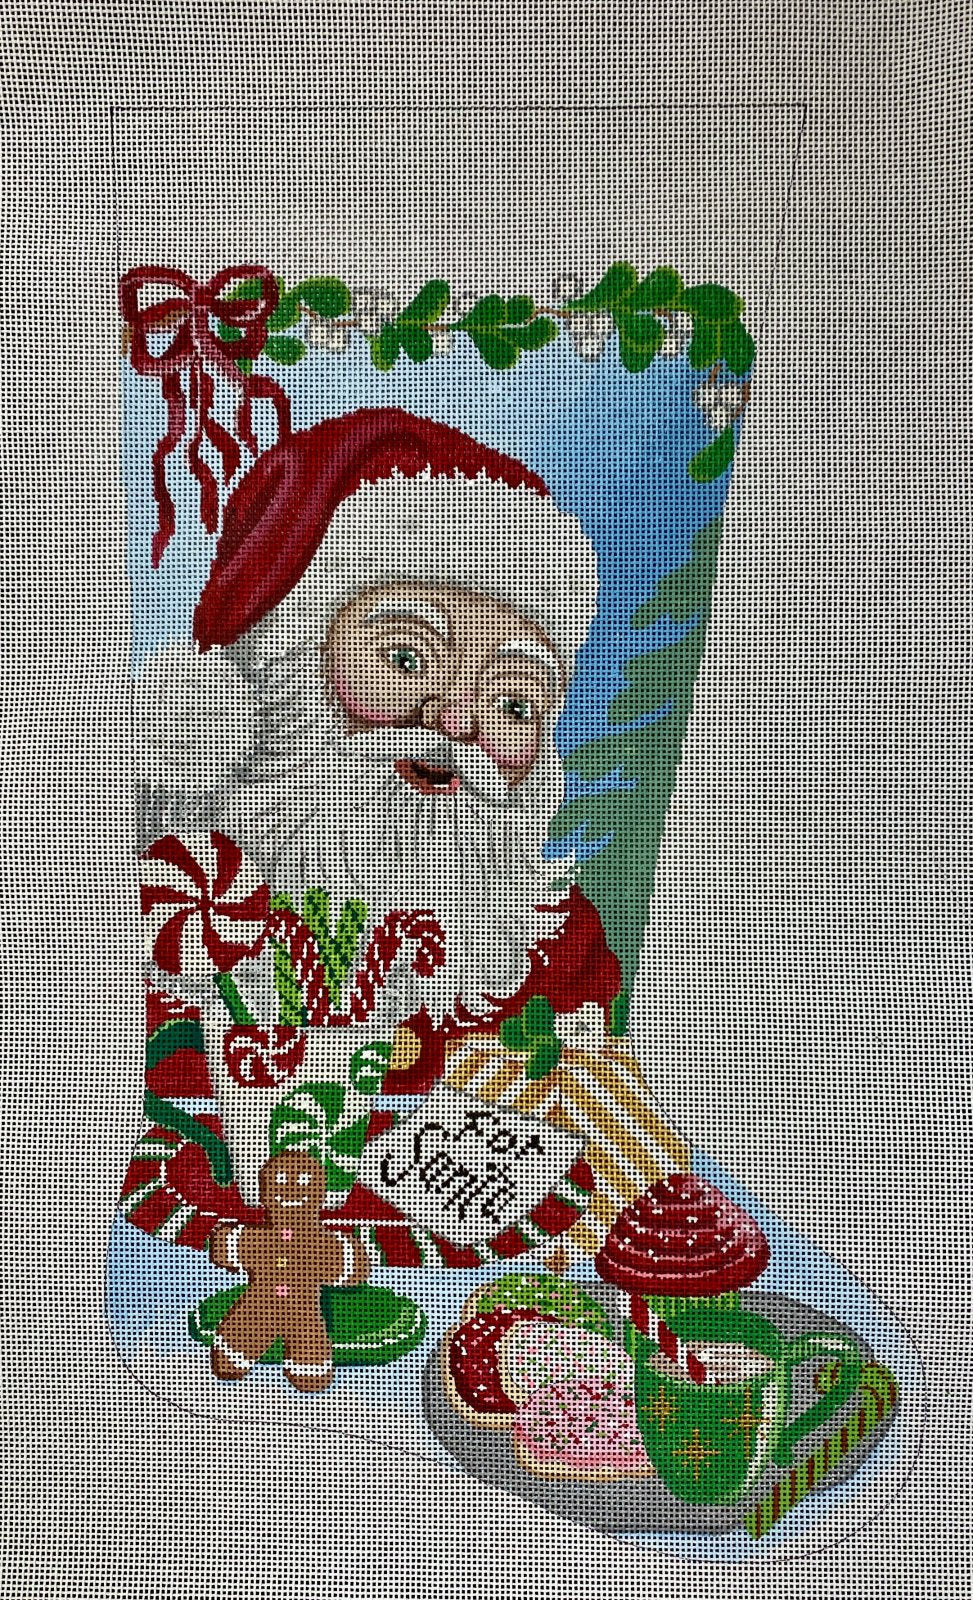 for santa stocking